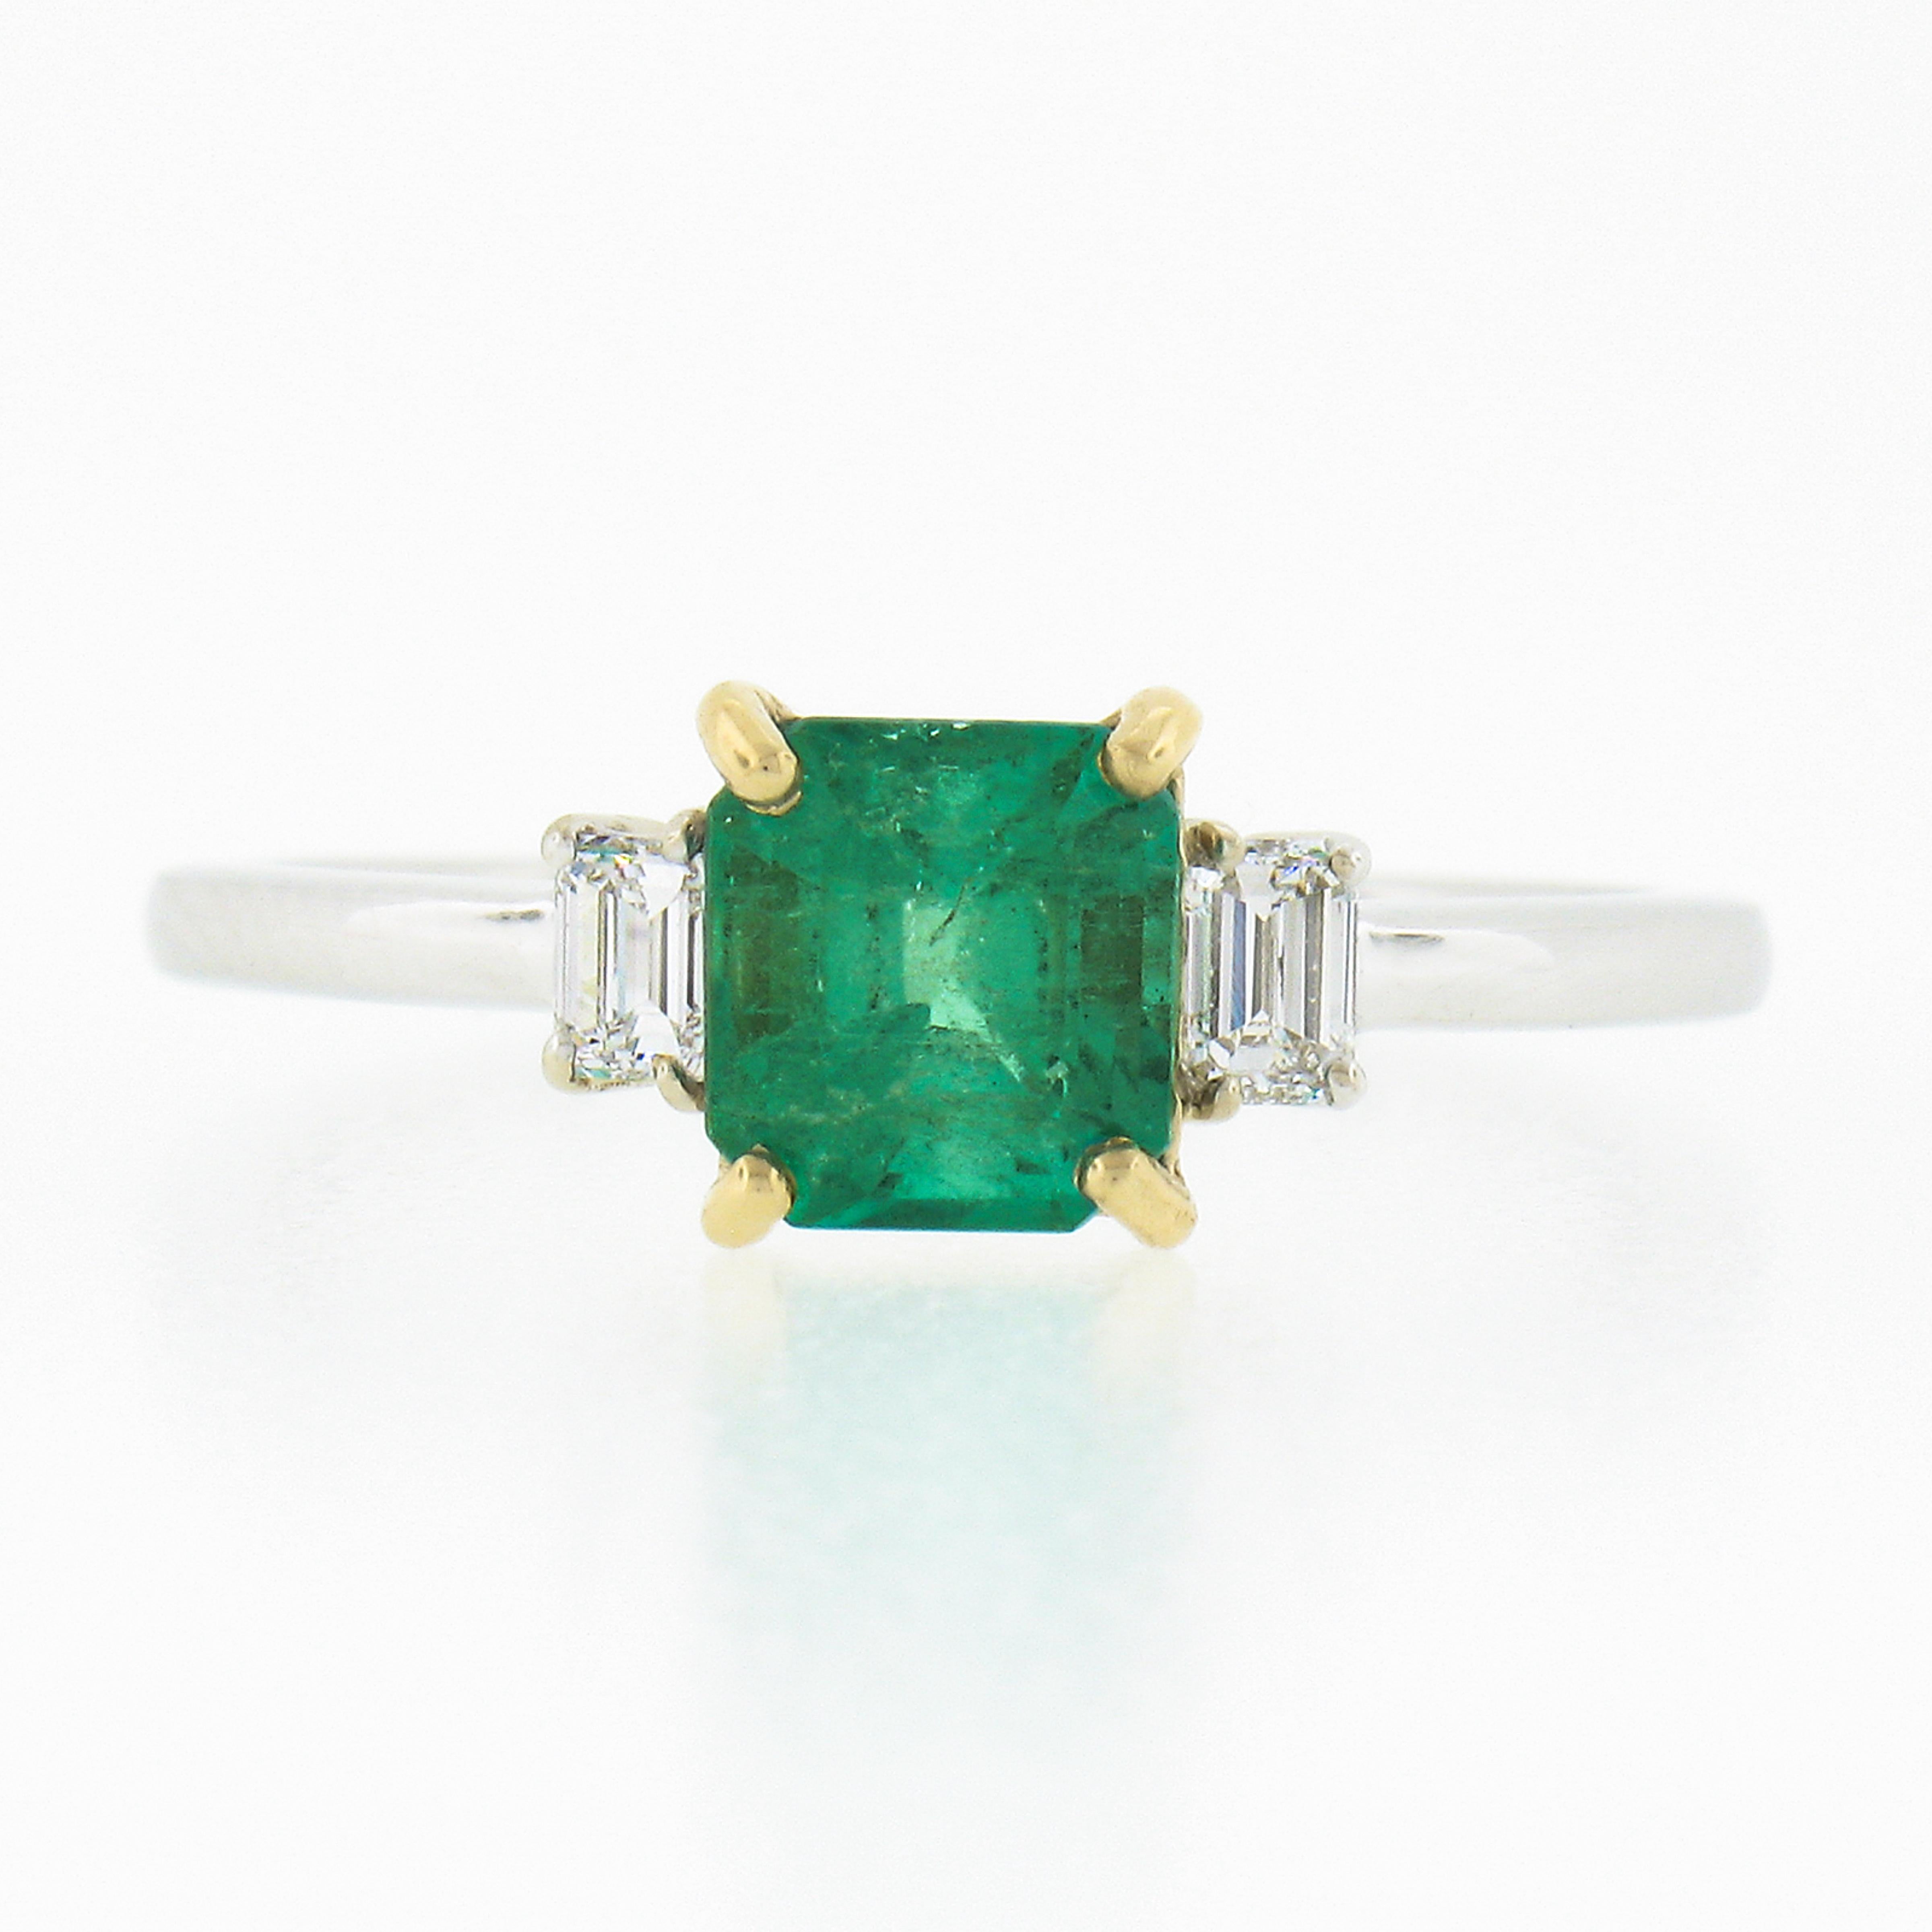 NEW 18k TT Gold 1.05ctw Emerald Cut Columbian Emerald w/ Diamond Accents Ring